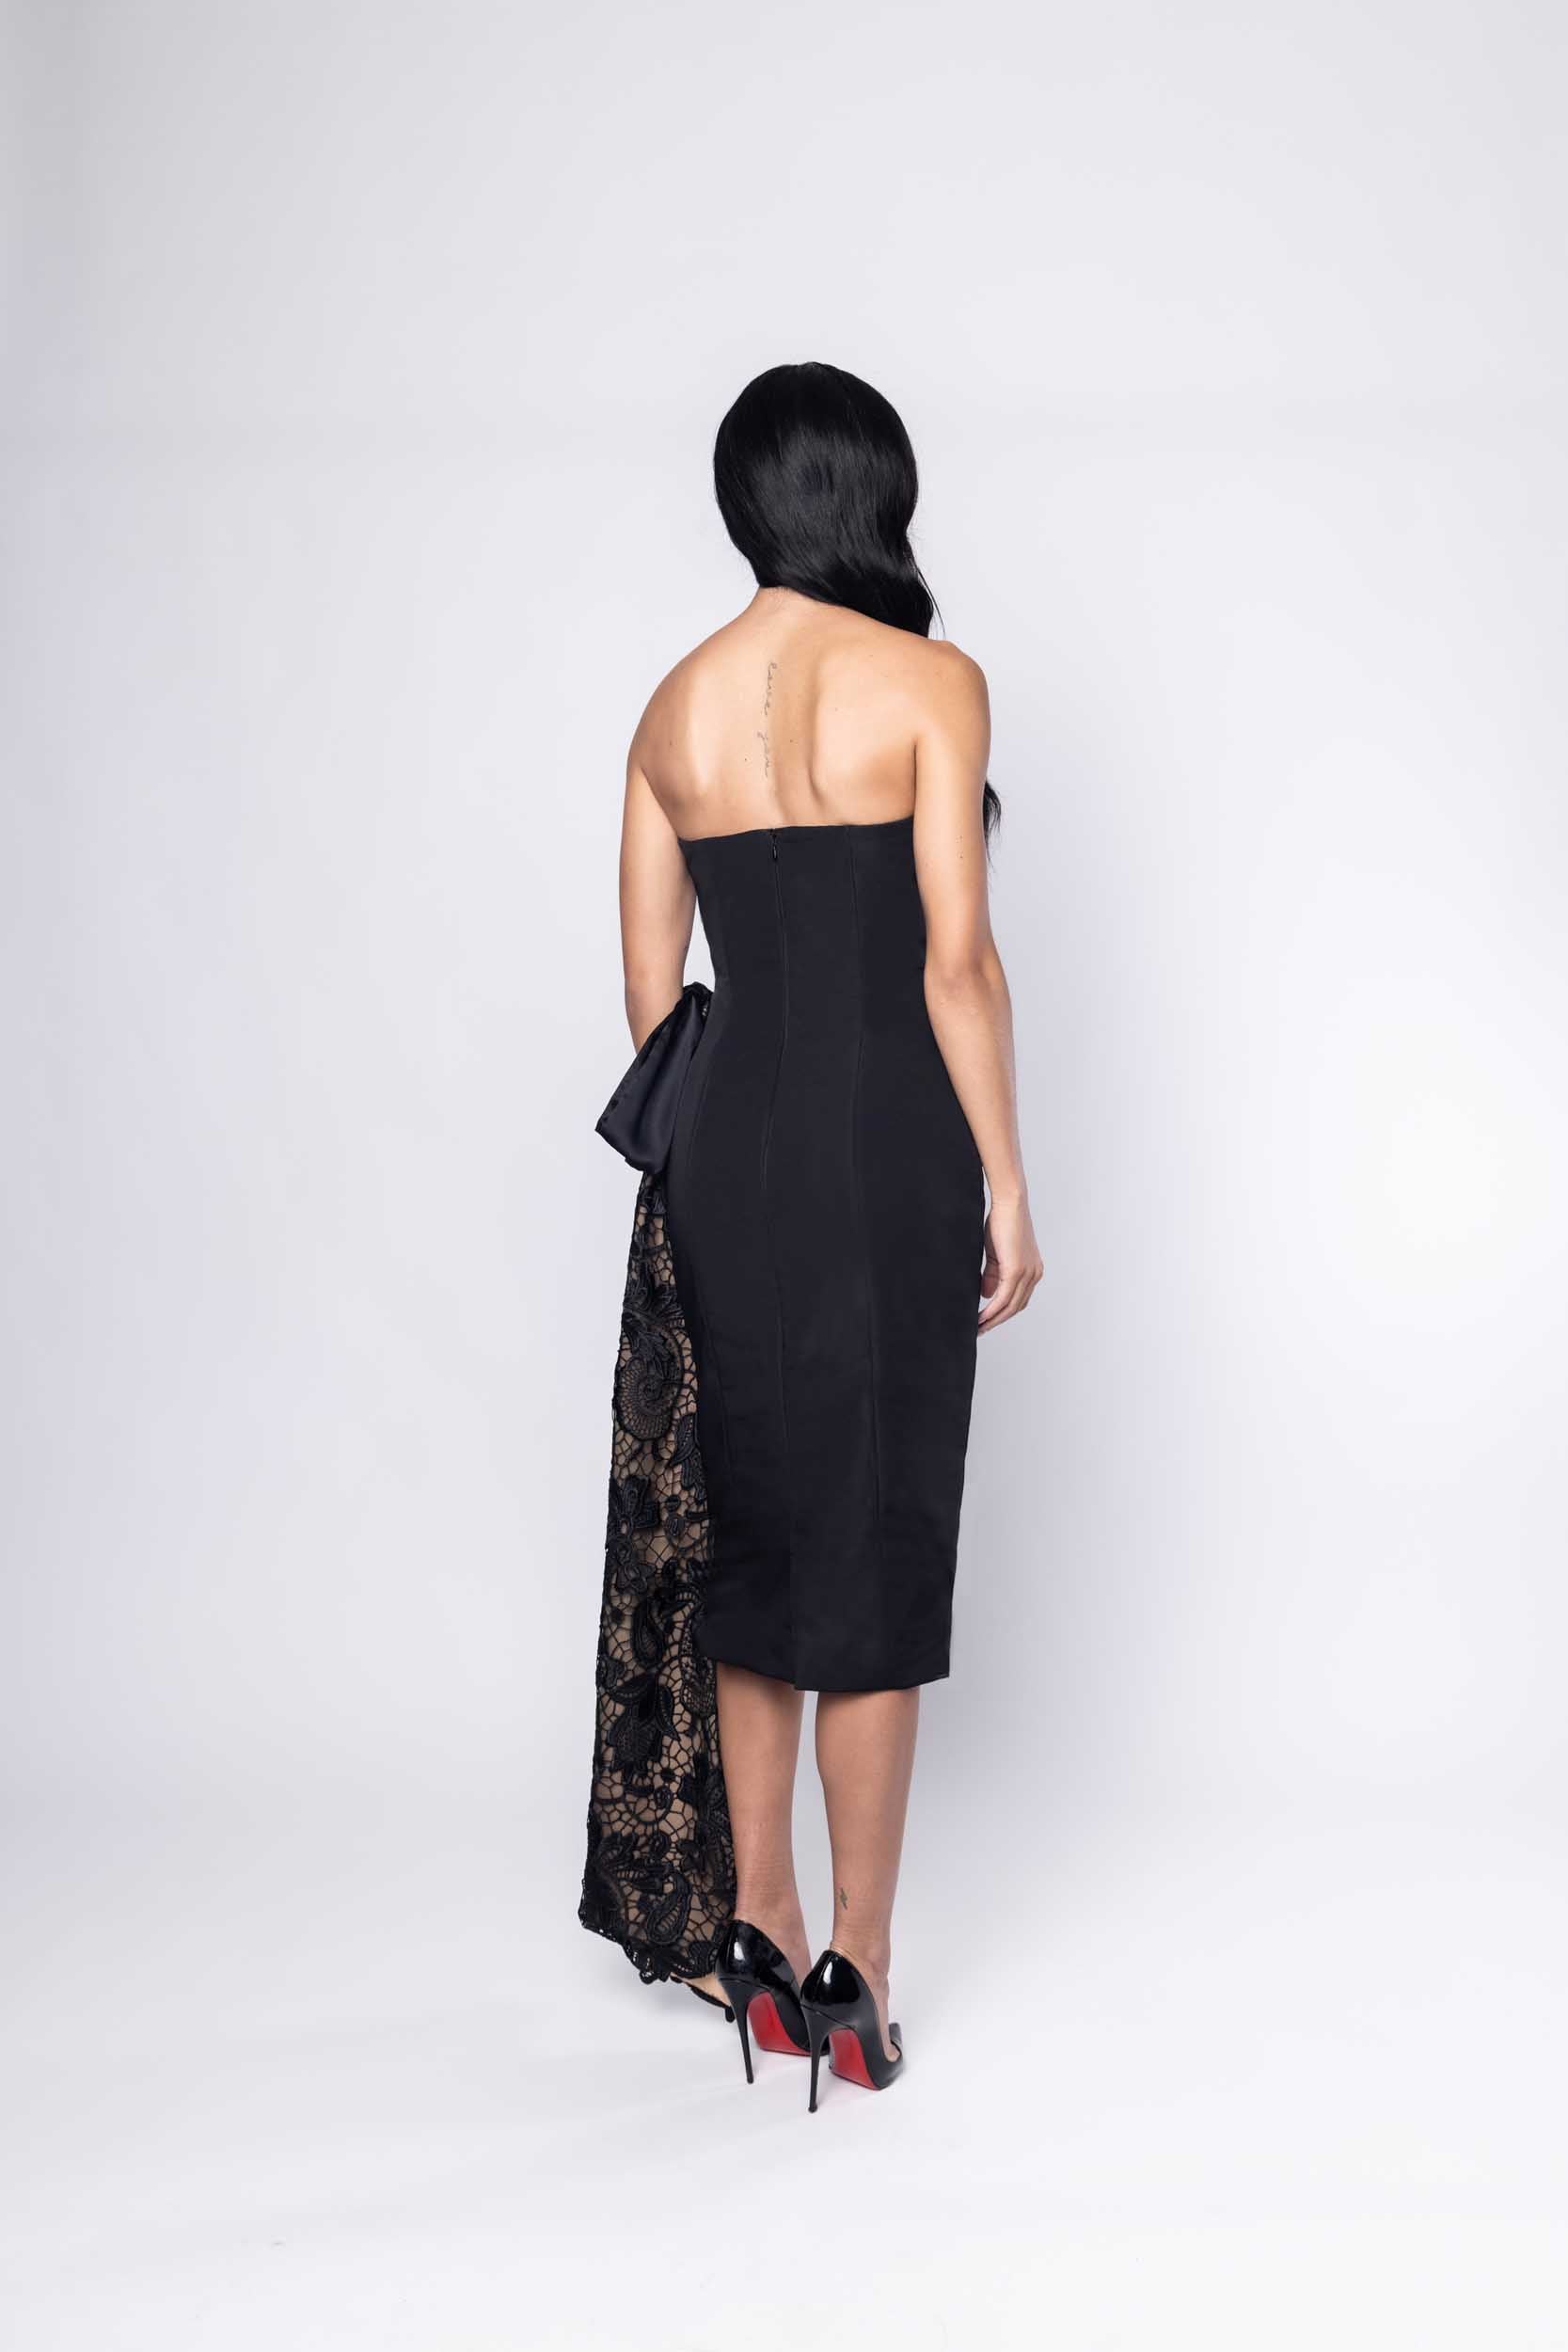 Gorgeous model in chic black embellished Sujata Gazder cocktail dress - back view